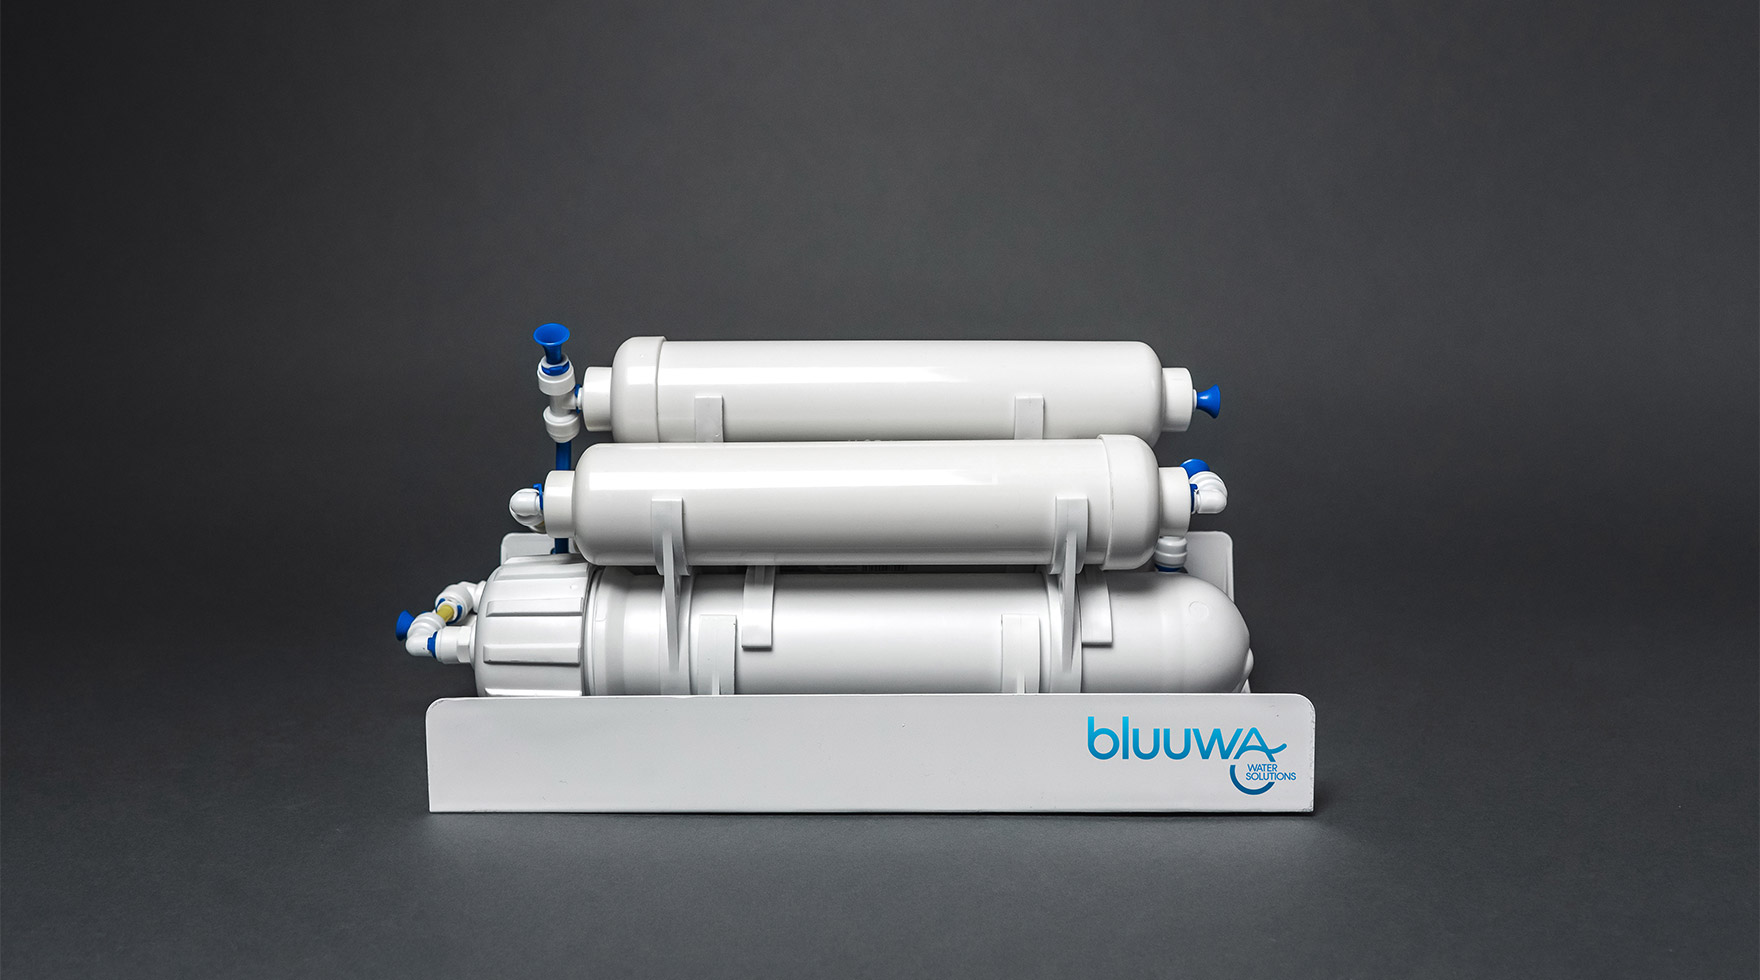 bluuwa-watersolutions-1-online-shop-foto-produktion-agentur-berlin